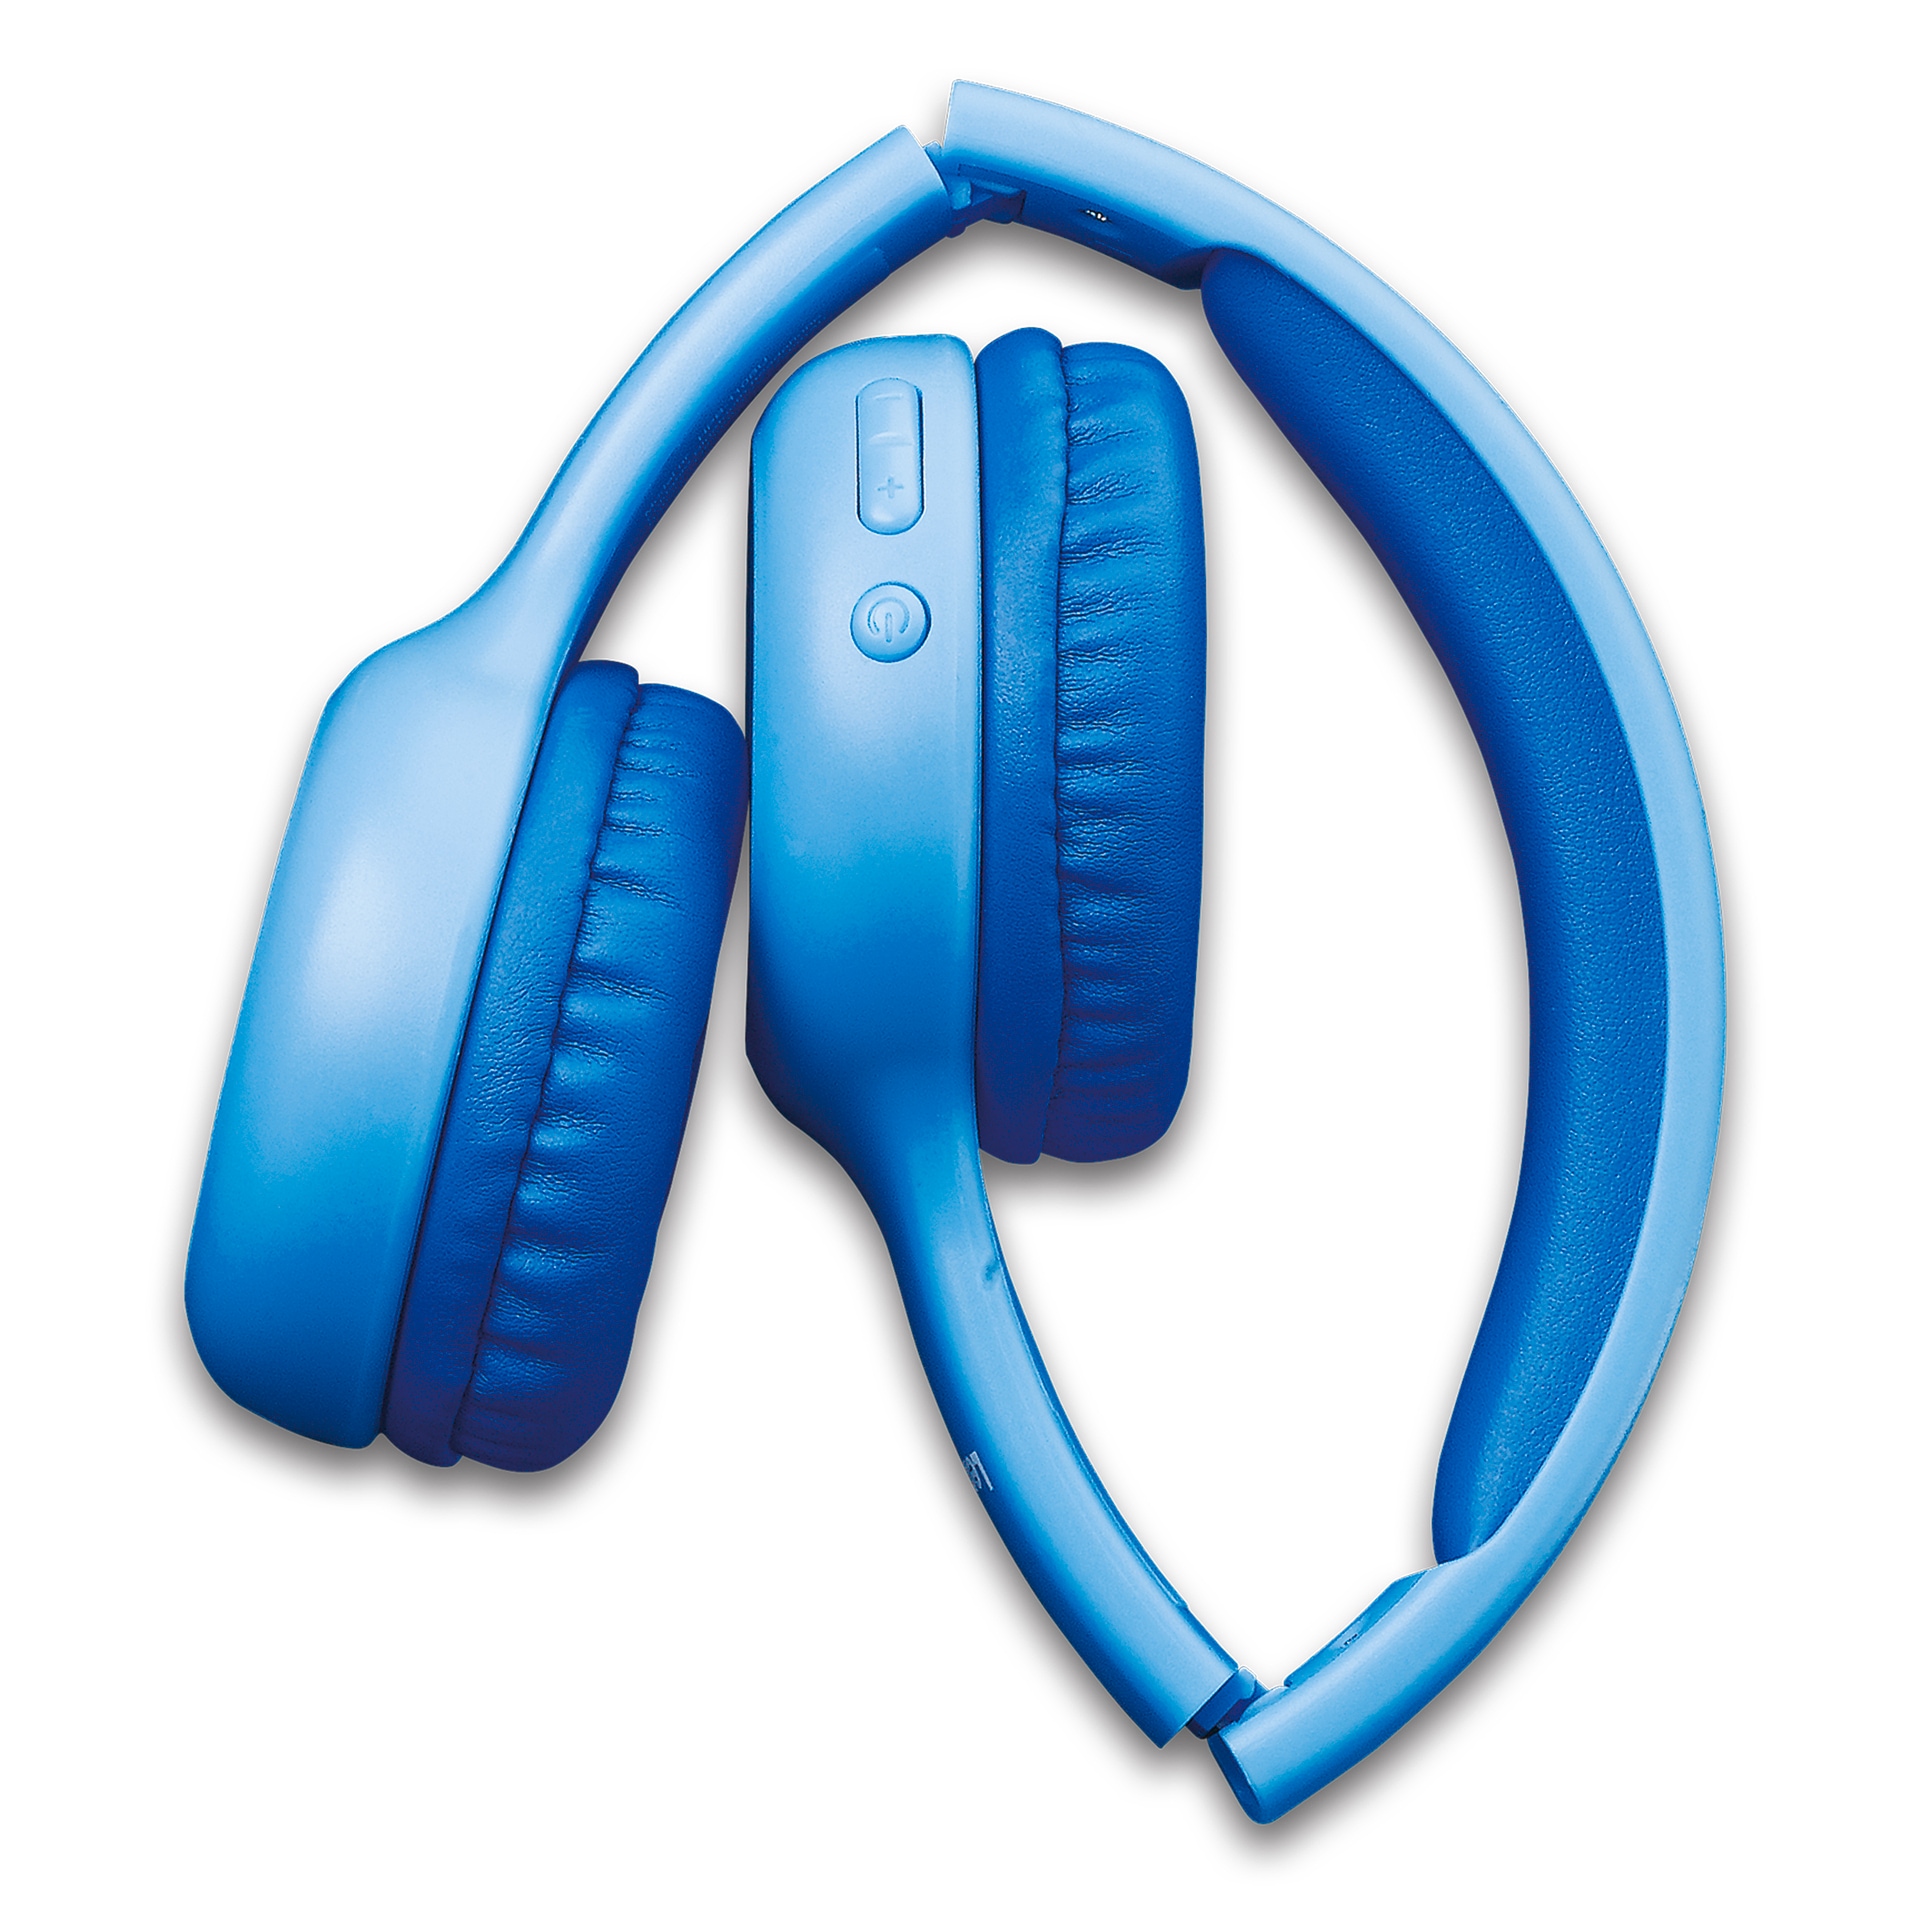 »HPB-110 mit Over-Ear-Kopfhörer bei Sticker« Kinderkopfhörer jetzt OTTO Lenco